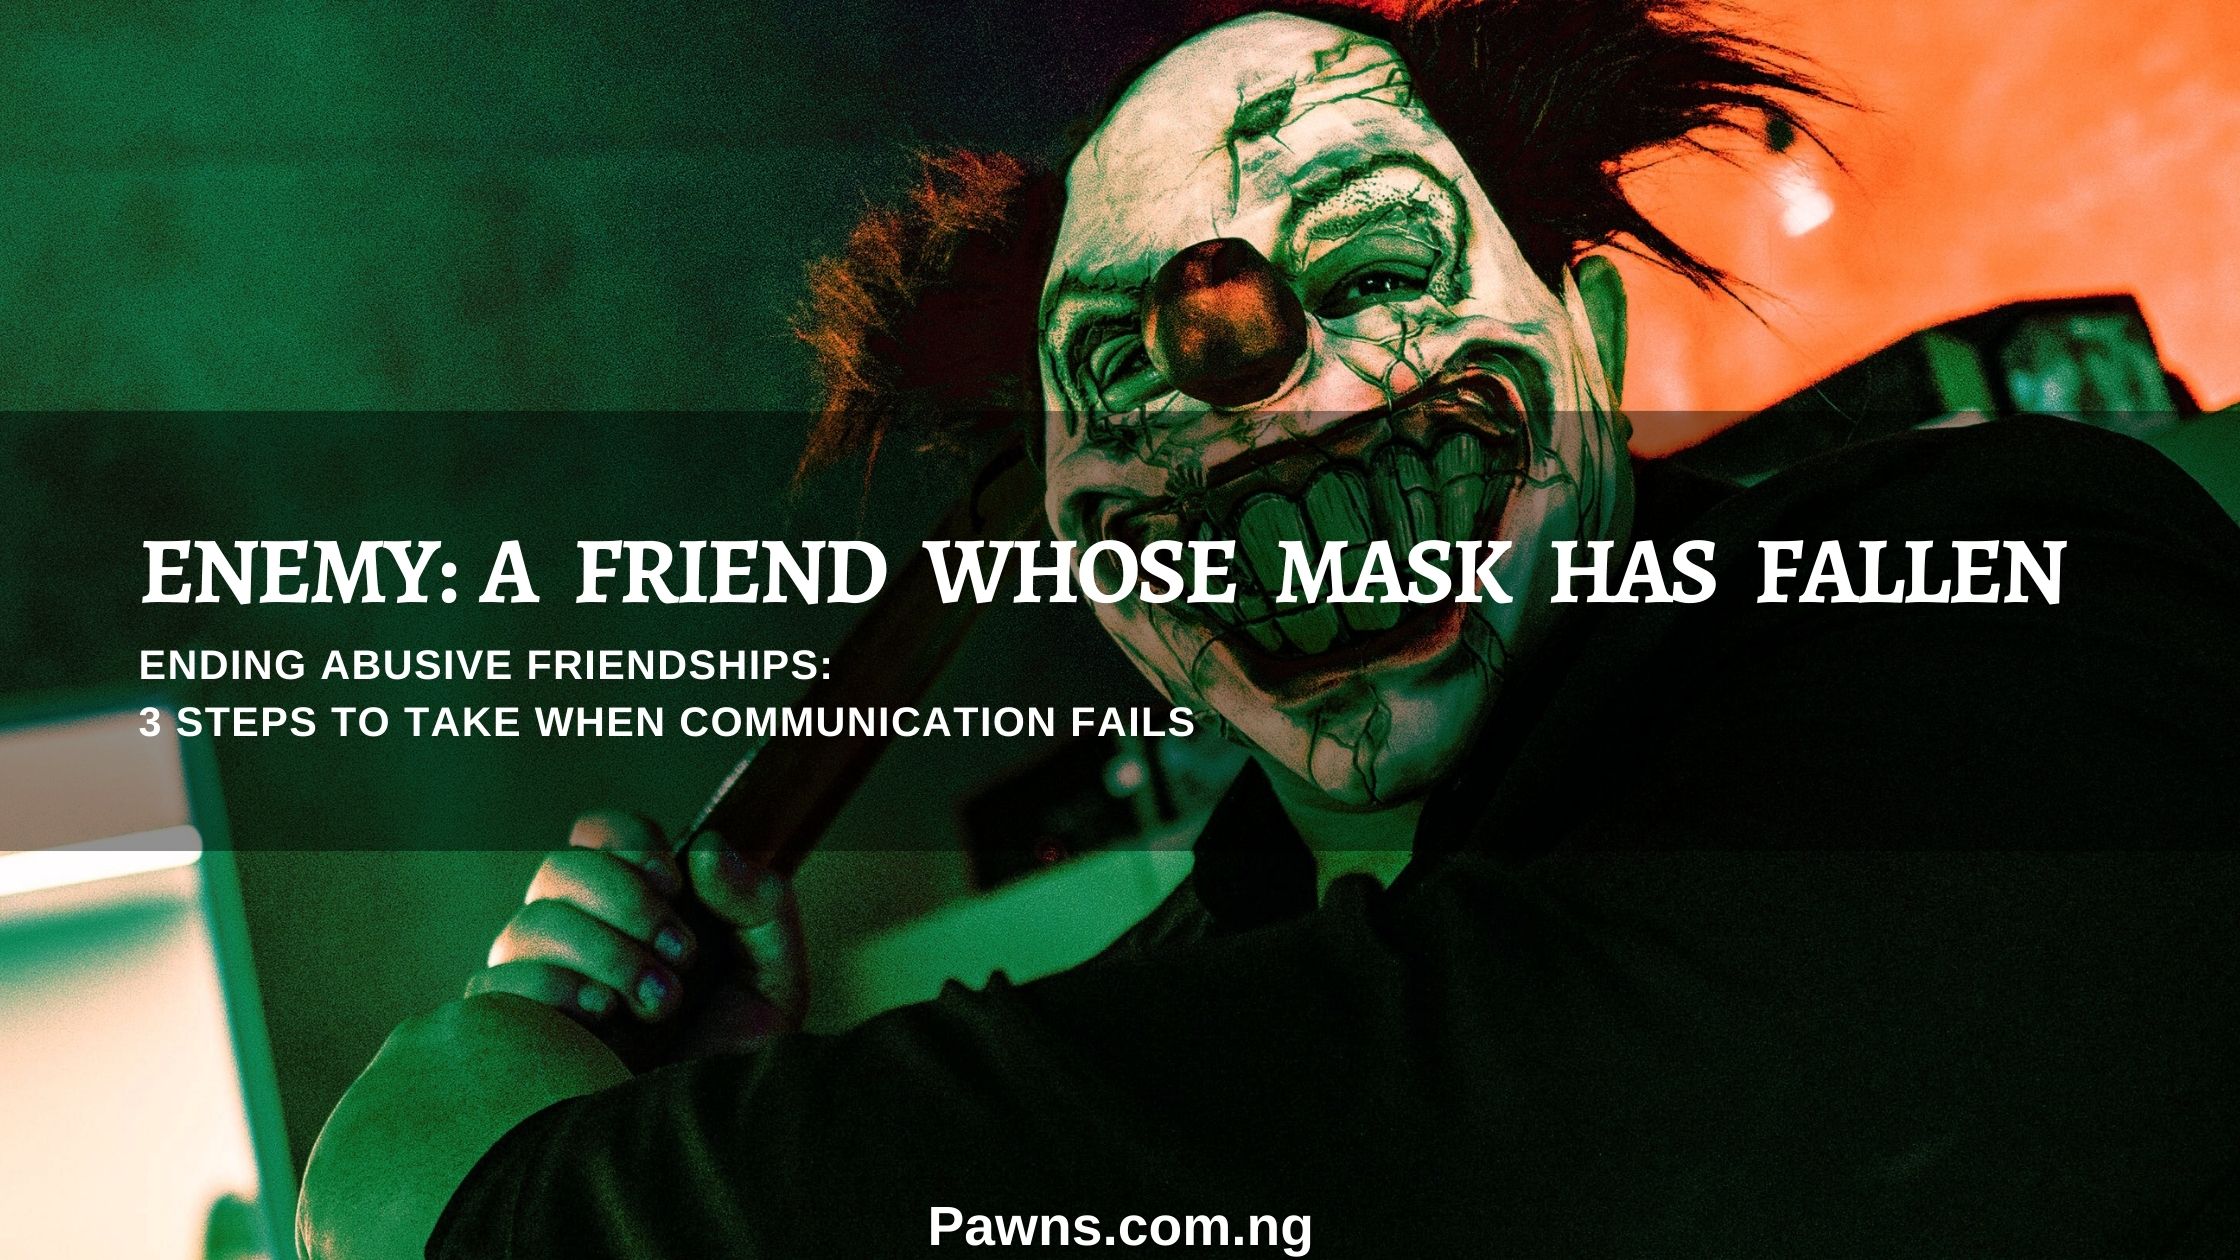 Ending Abusive Friendships enemy is a friend whose mask has fallen